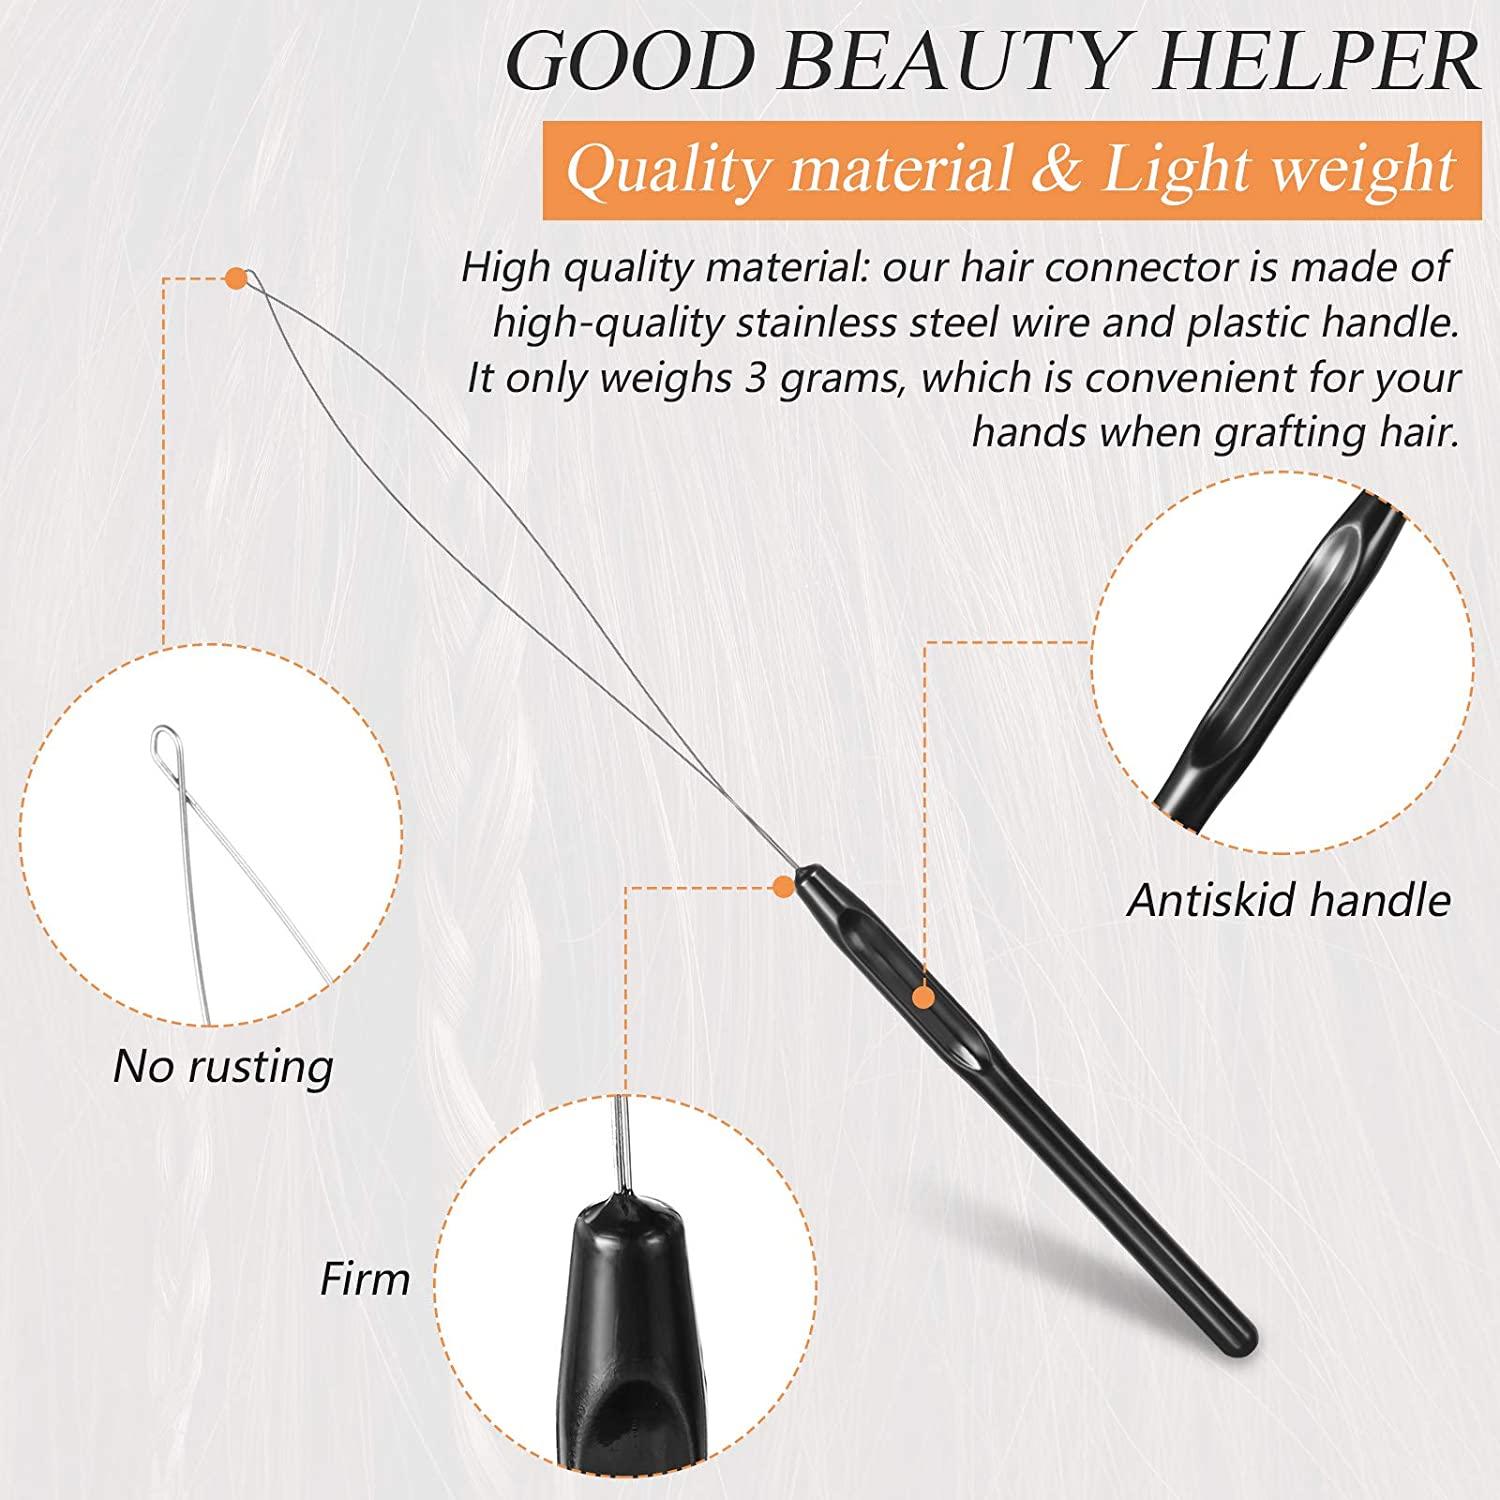 10PCS Hair Extensions Tools, Hair Extension Loop Needle Threader,  Multicolor Hair Pulling Hook Bead Device Tool for Hair Extensions, Hair  Feather